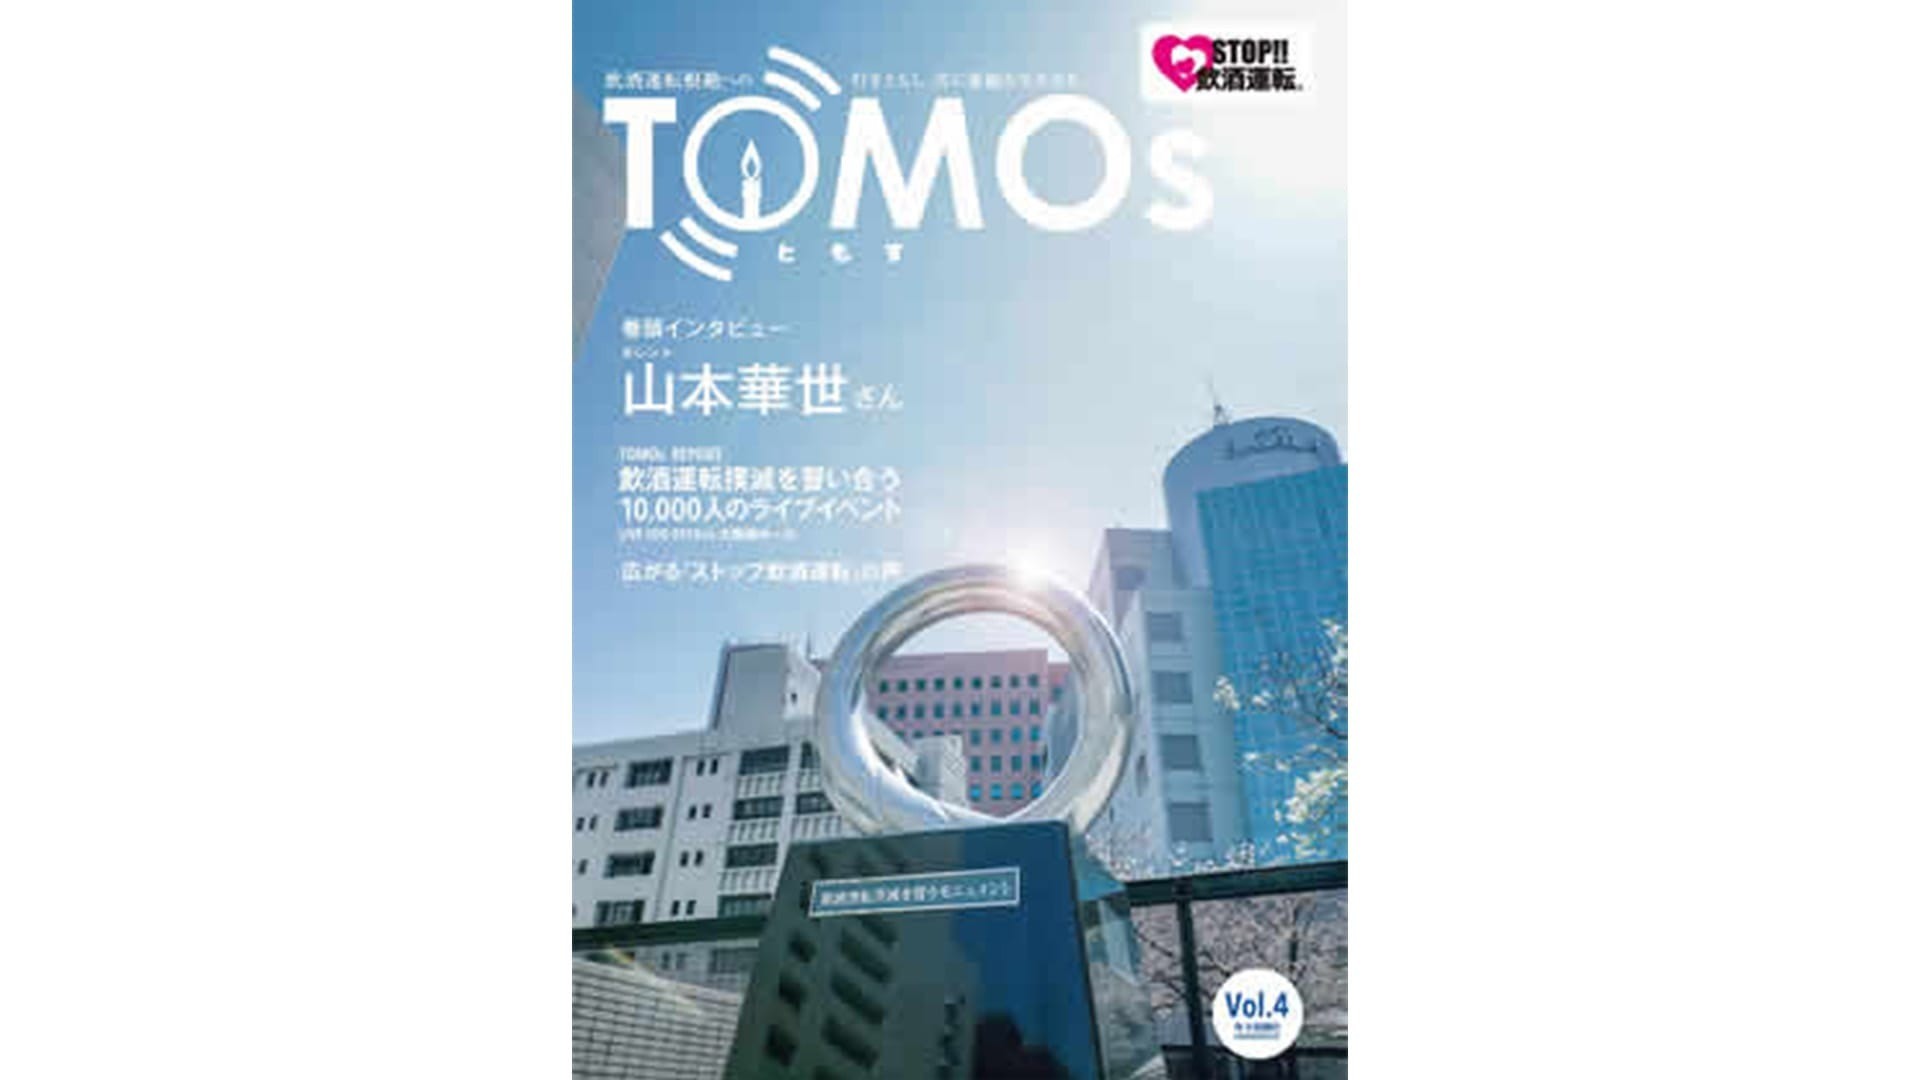 TOMOs vol.04 タレント 山本華世さんインタビュー